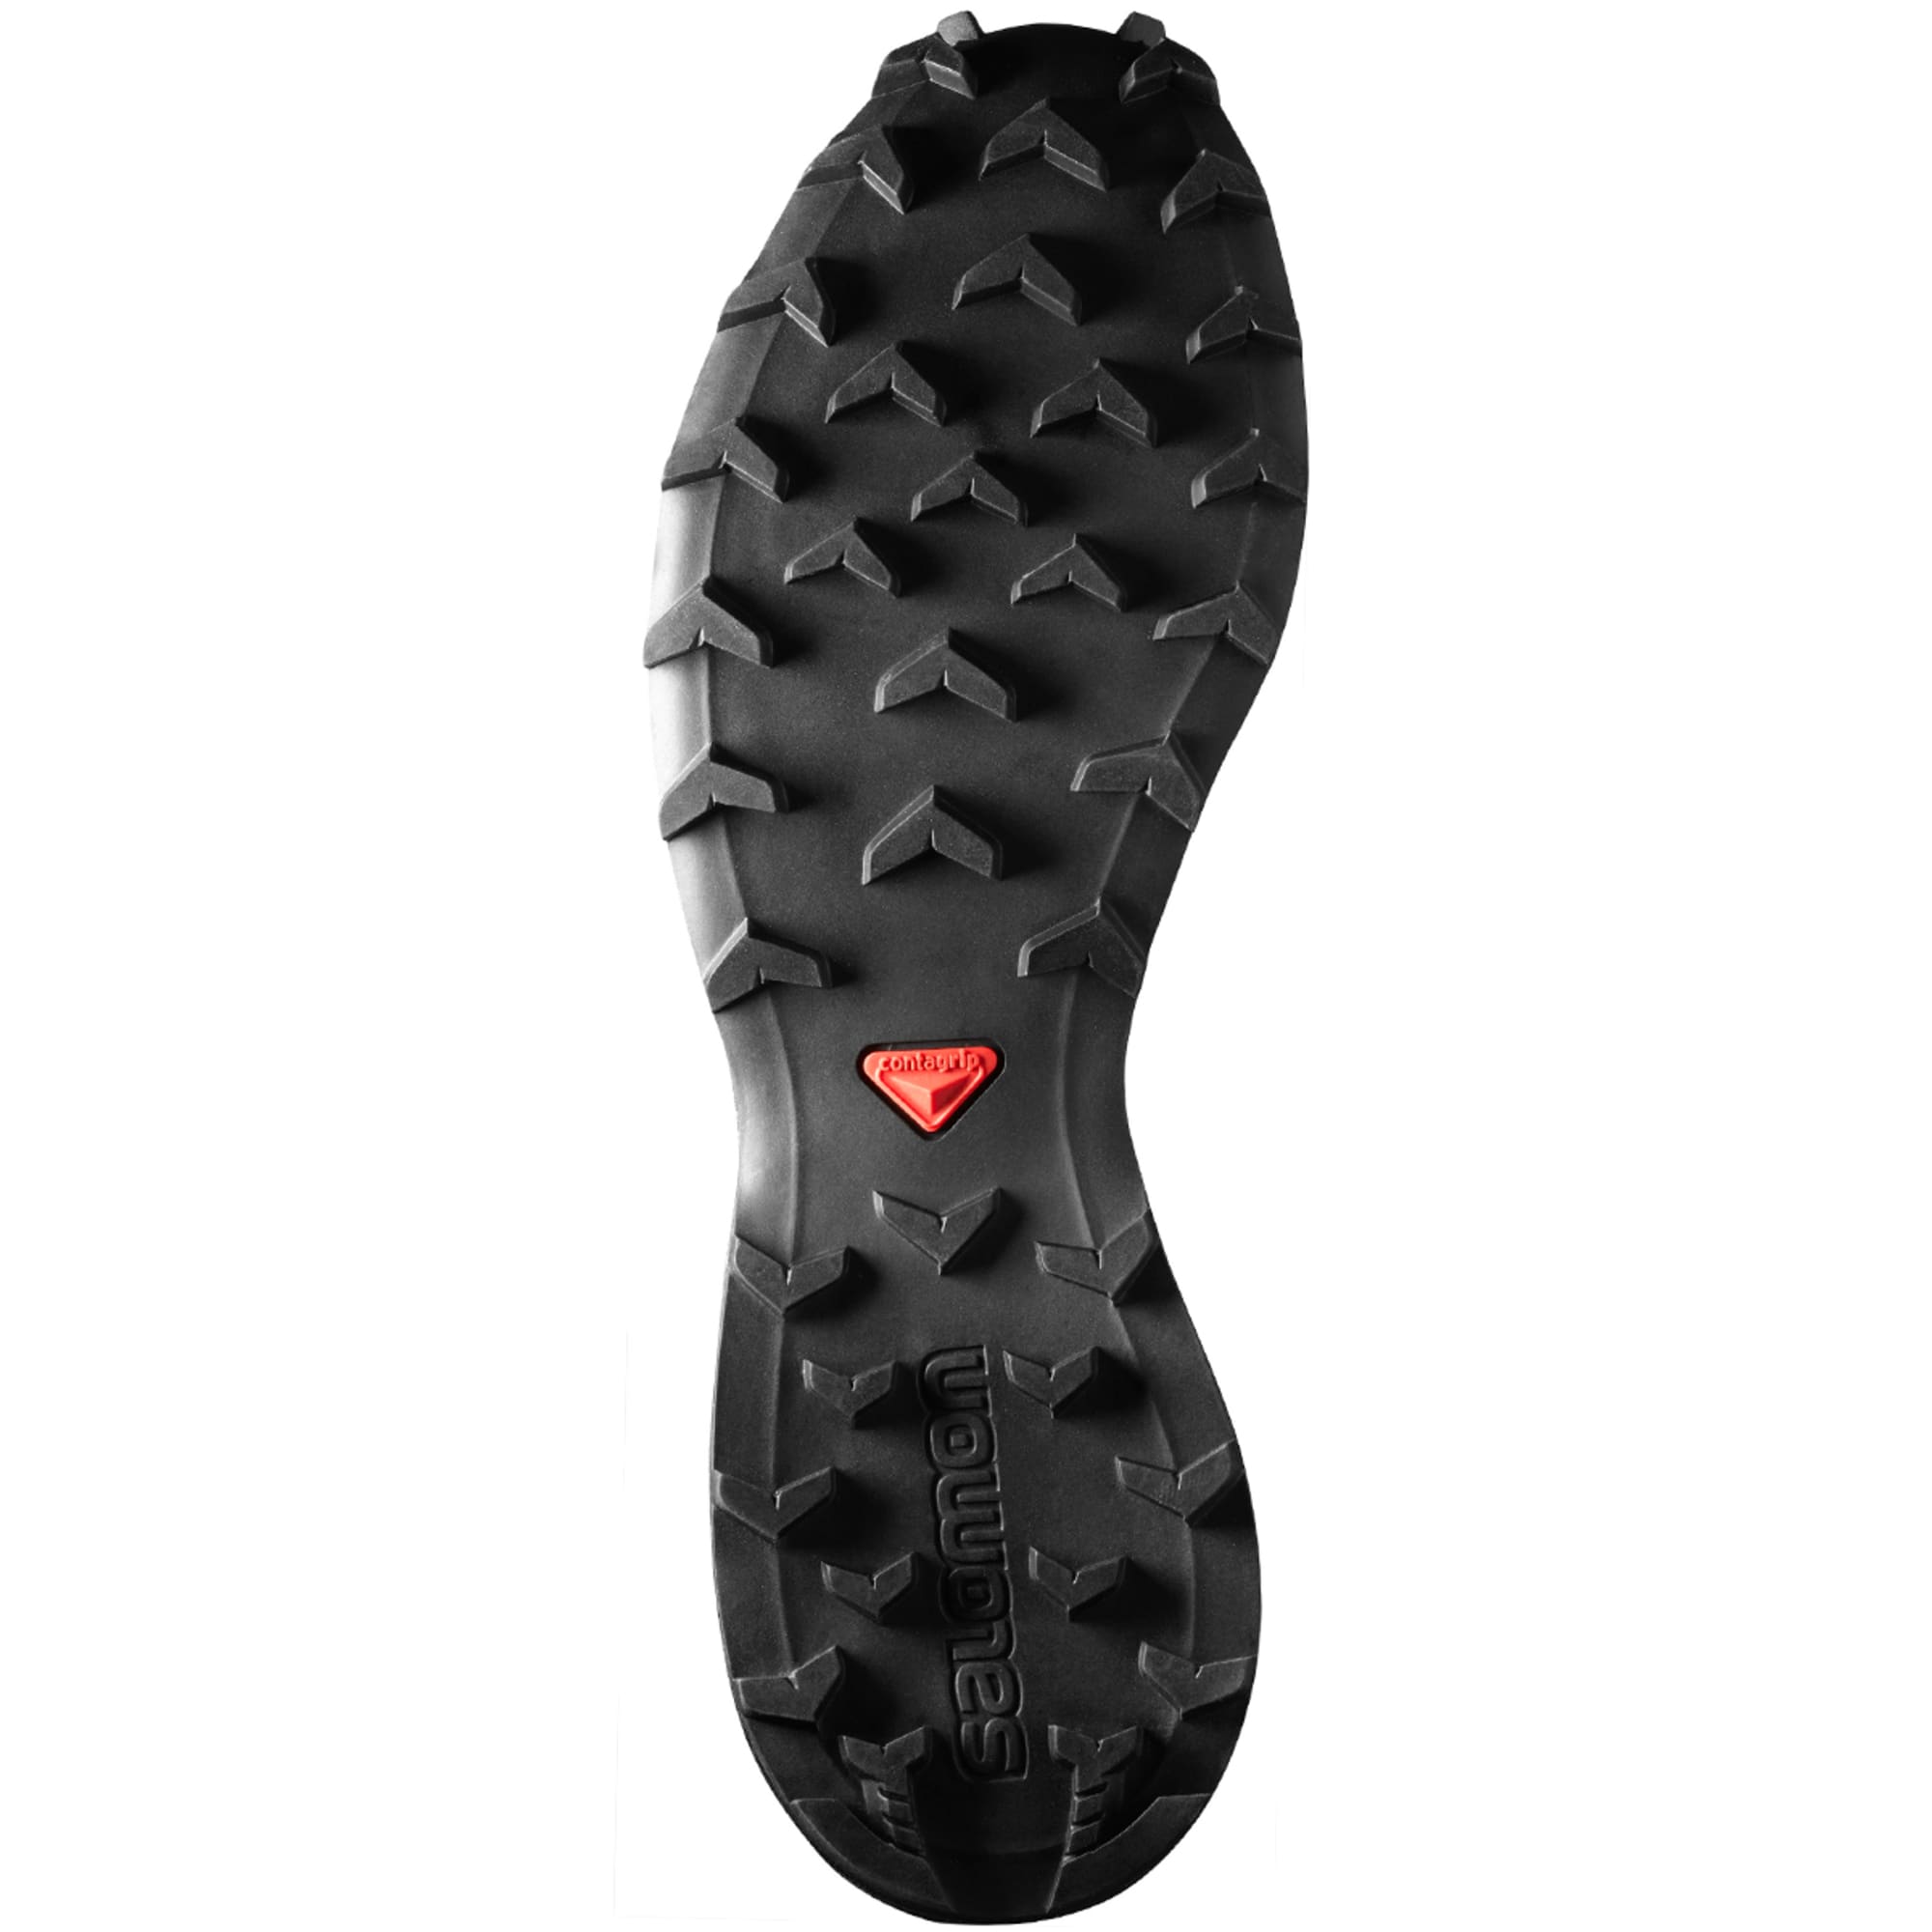  Salomon Men's Speedcross 4 GTX Trail Running Shoes,  Black/Black/SILVER METALLIC-X, 8